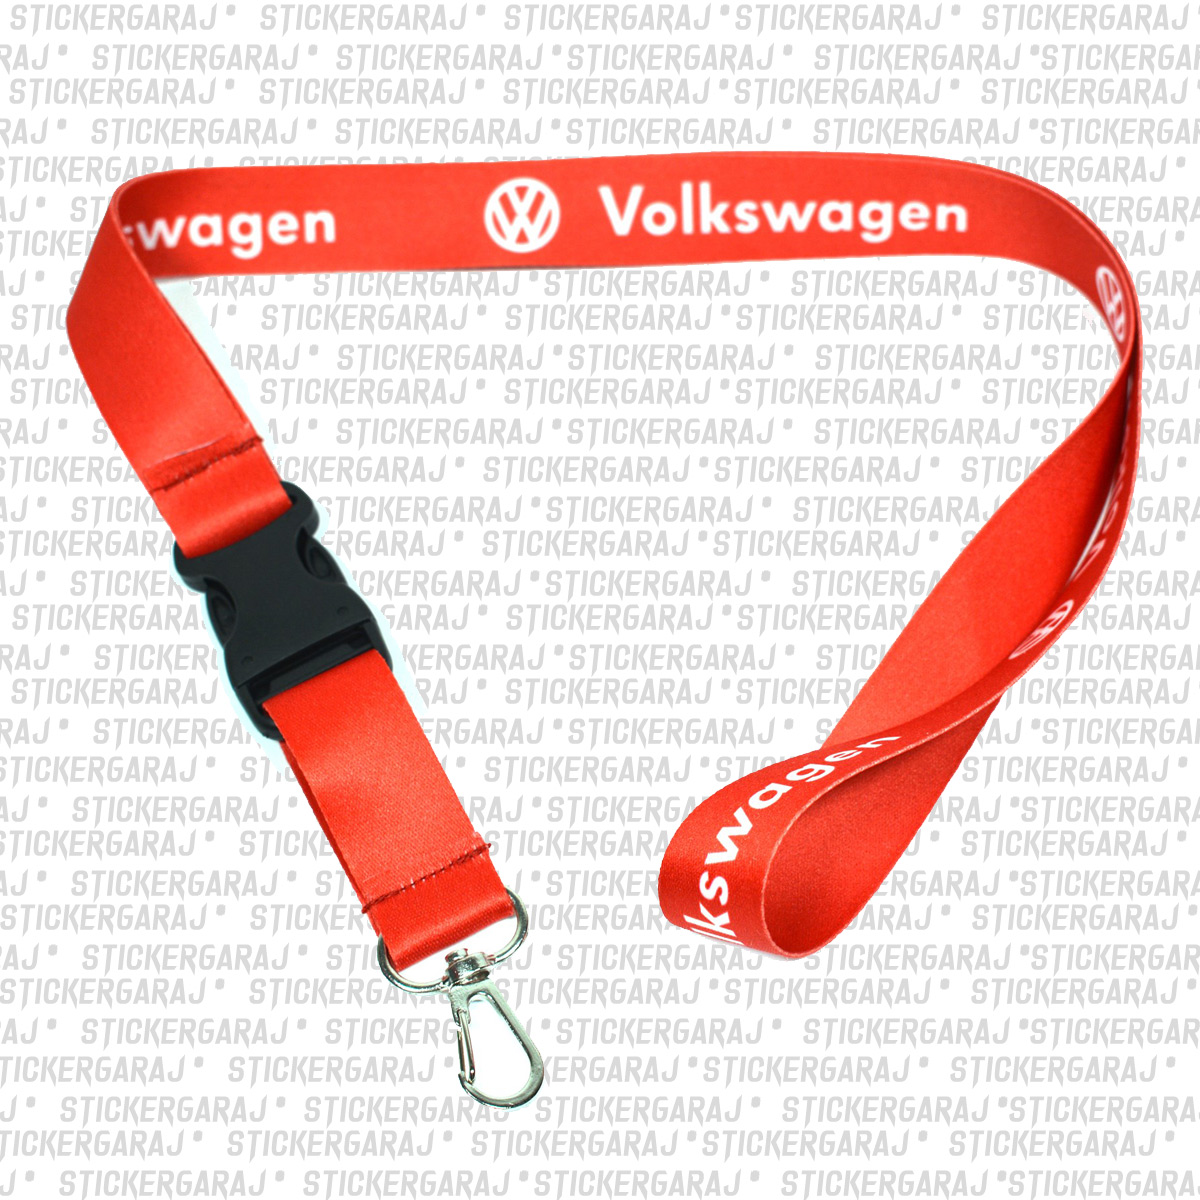 Volkswagen anahtarlik - Volkswagen ayna boyun ipi - Baskılı